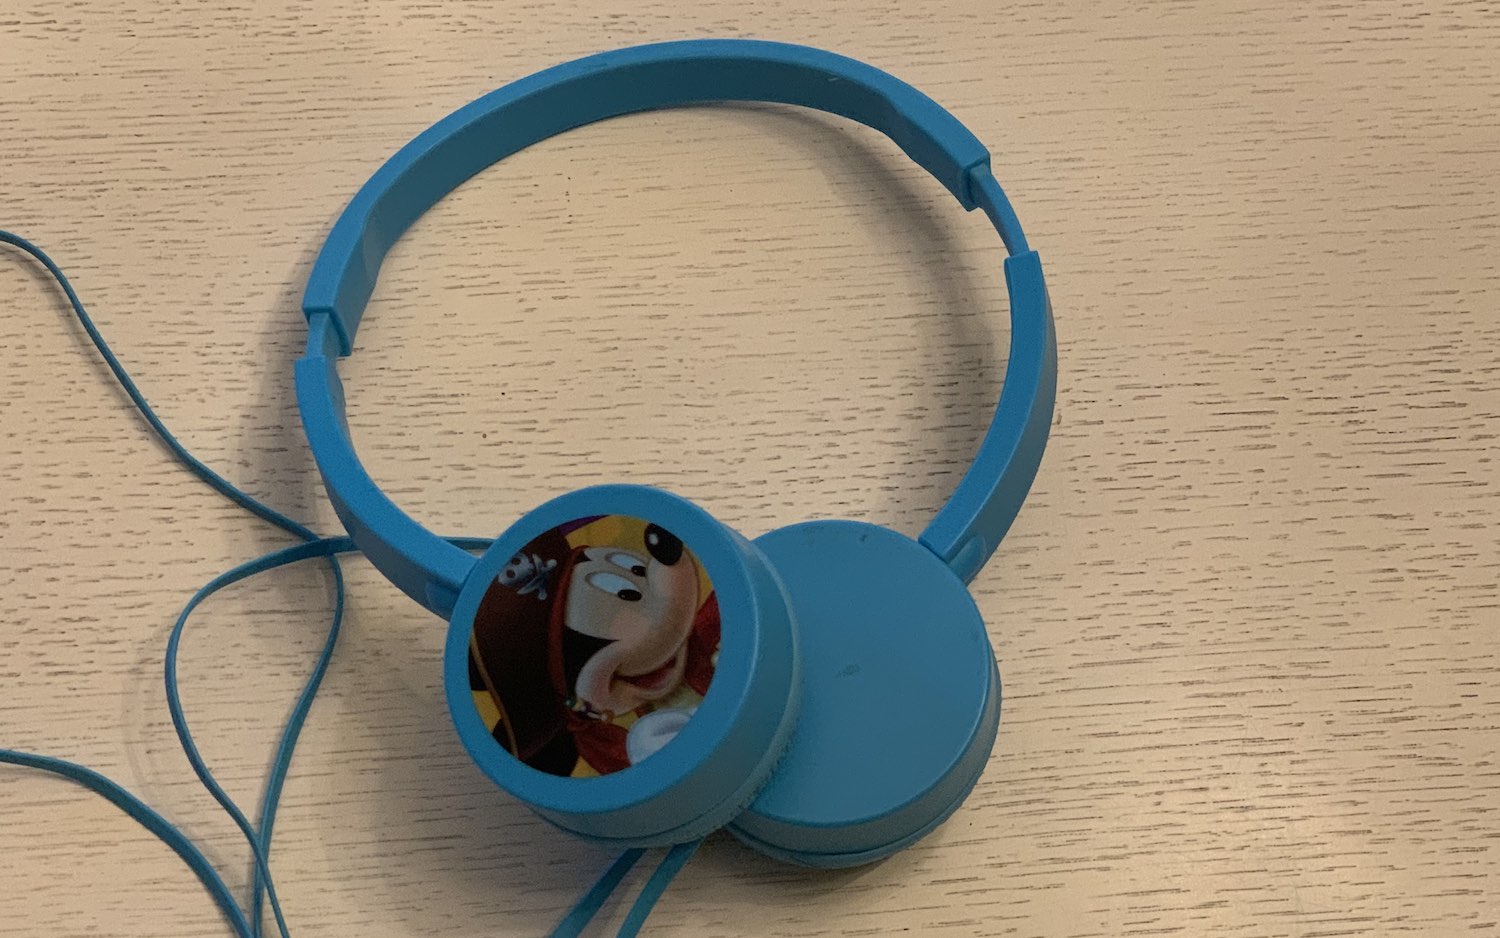 Disney Kids airBook headphones